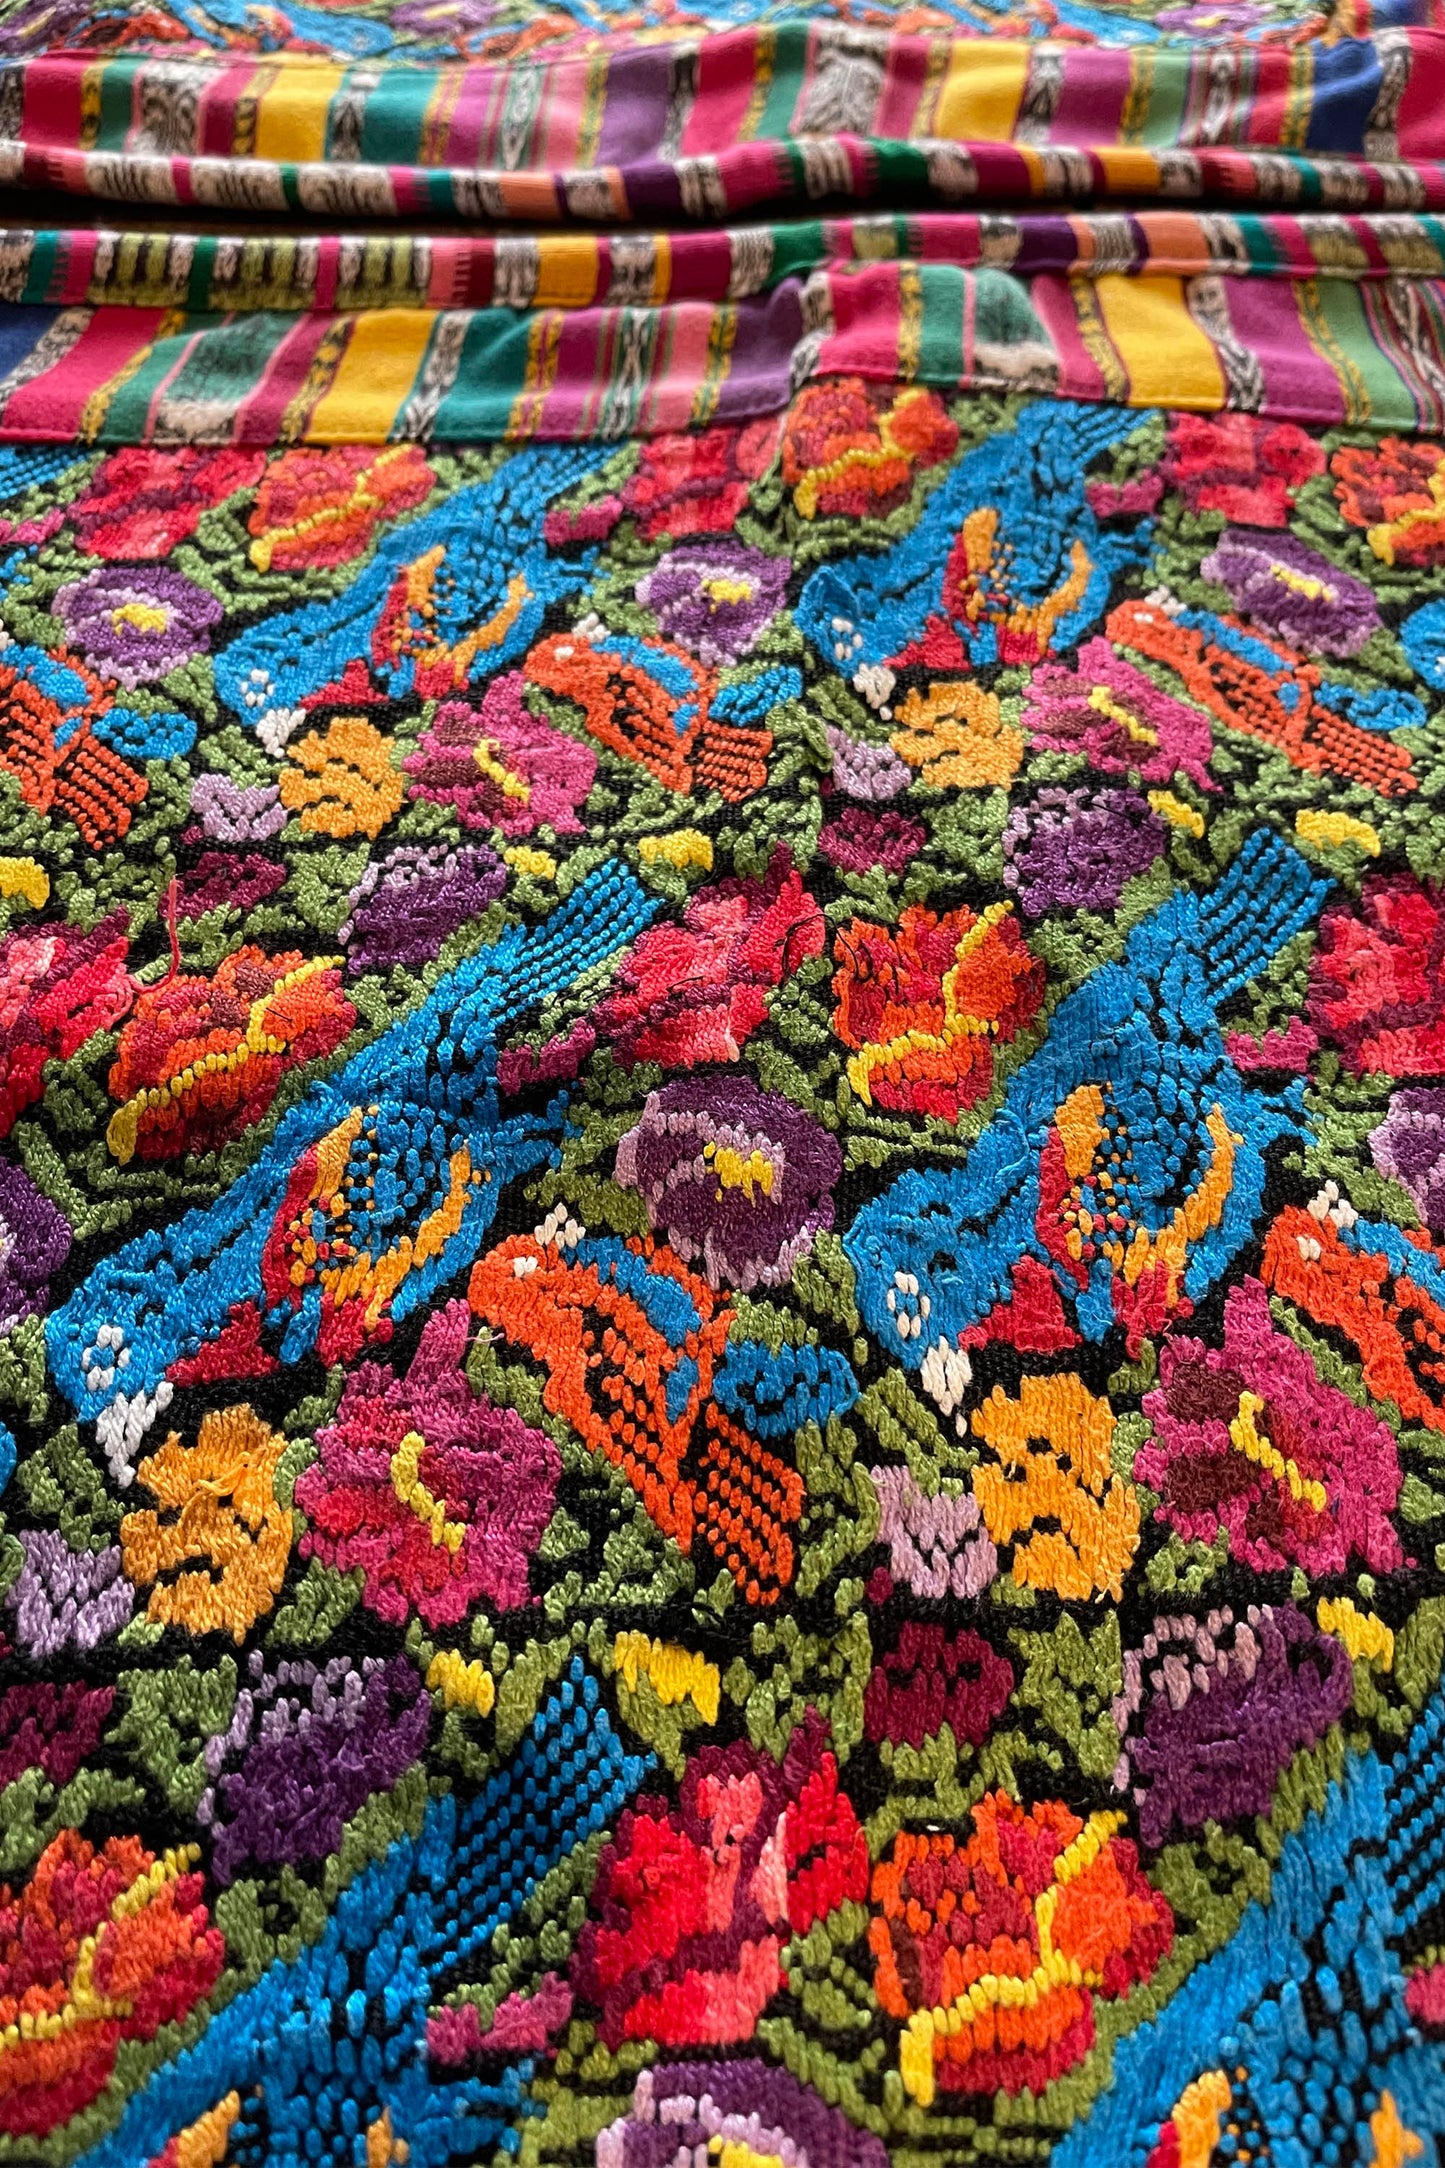 Guatemalan Pillow Covers from Almolonga Quetzaltenango